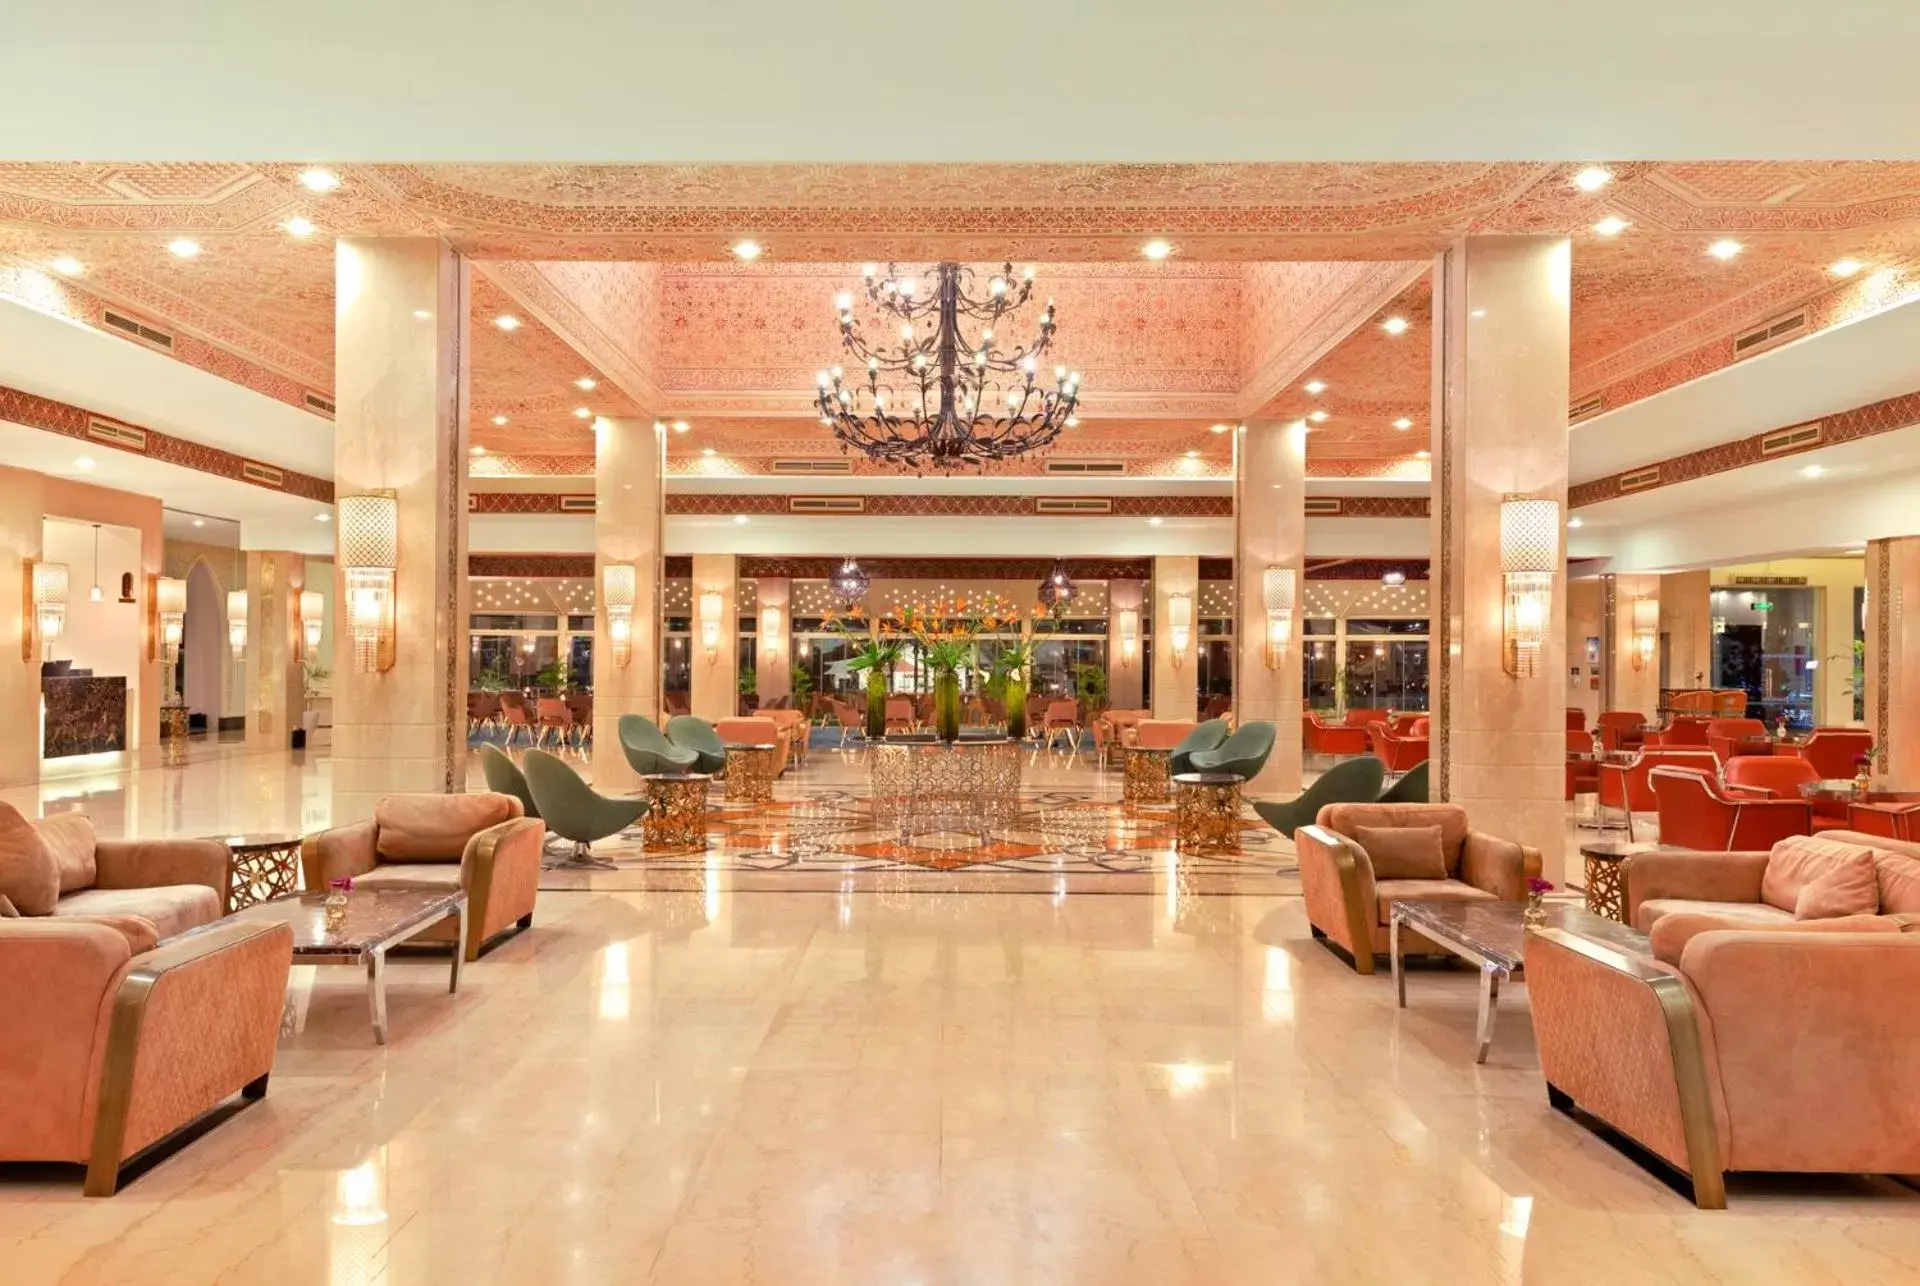 Lobby or reception, Restaurant/Places to Eat in Pickalbatros Dana Beach Resort - Hurghada